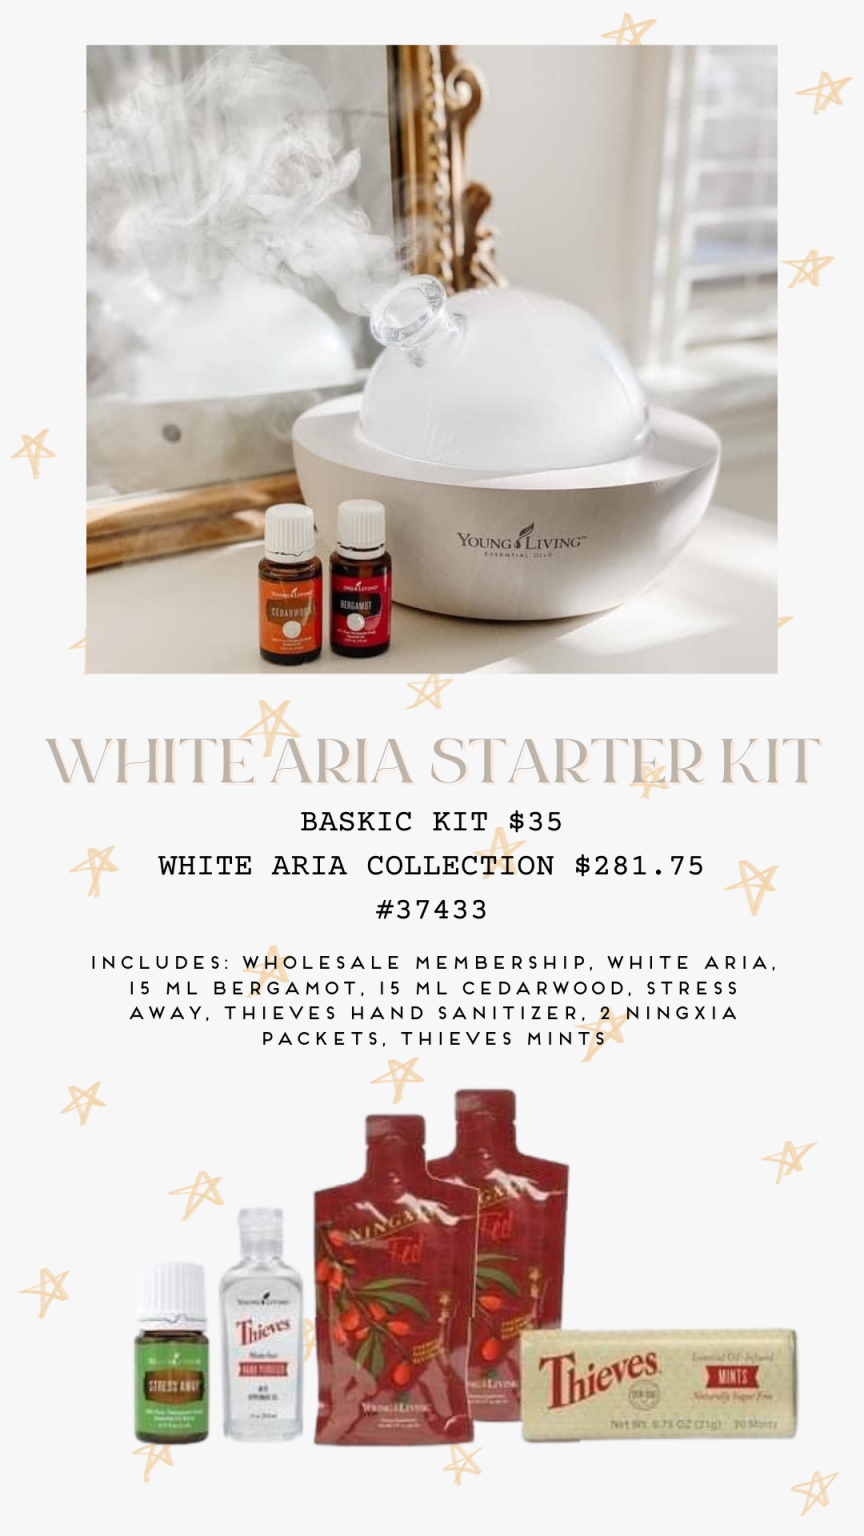 NEW Limited Edition White Aria Diffuser Seven Graces